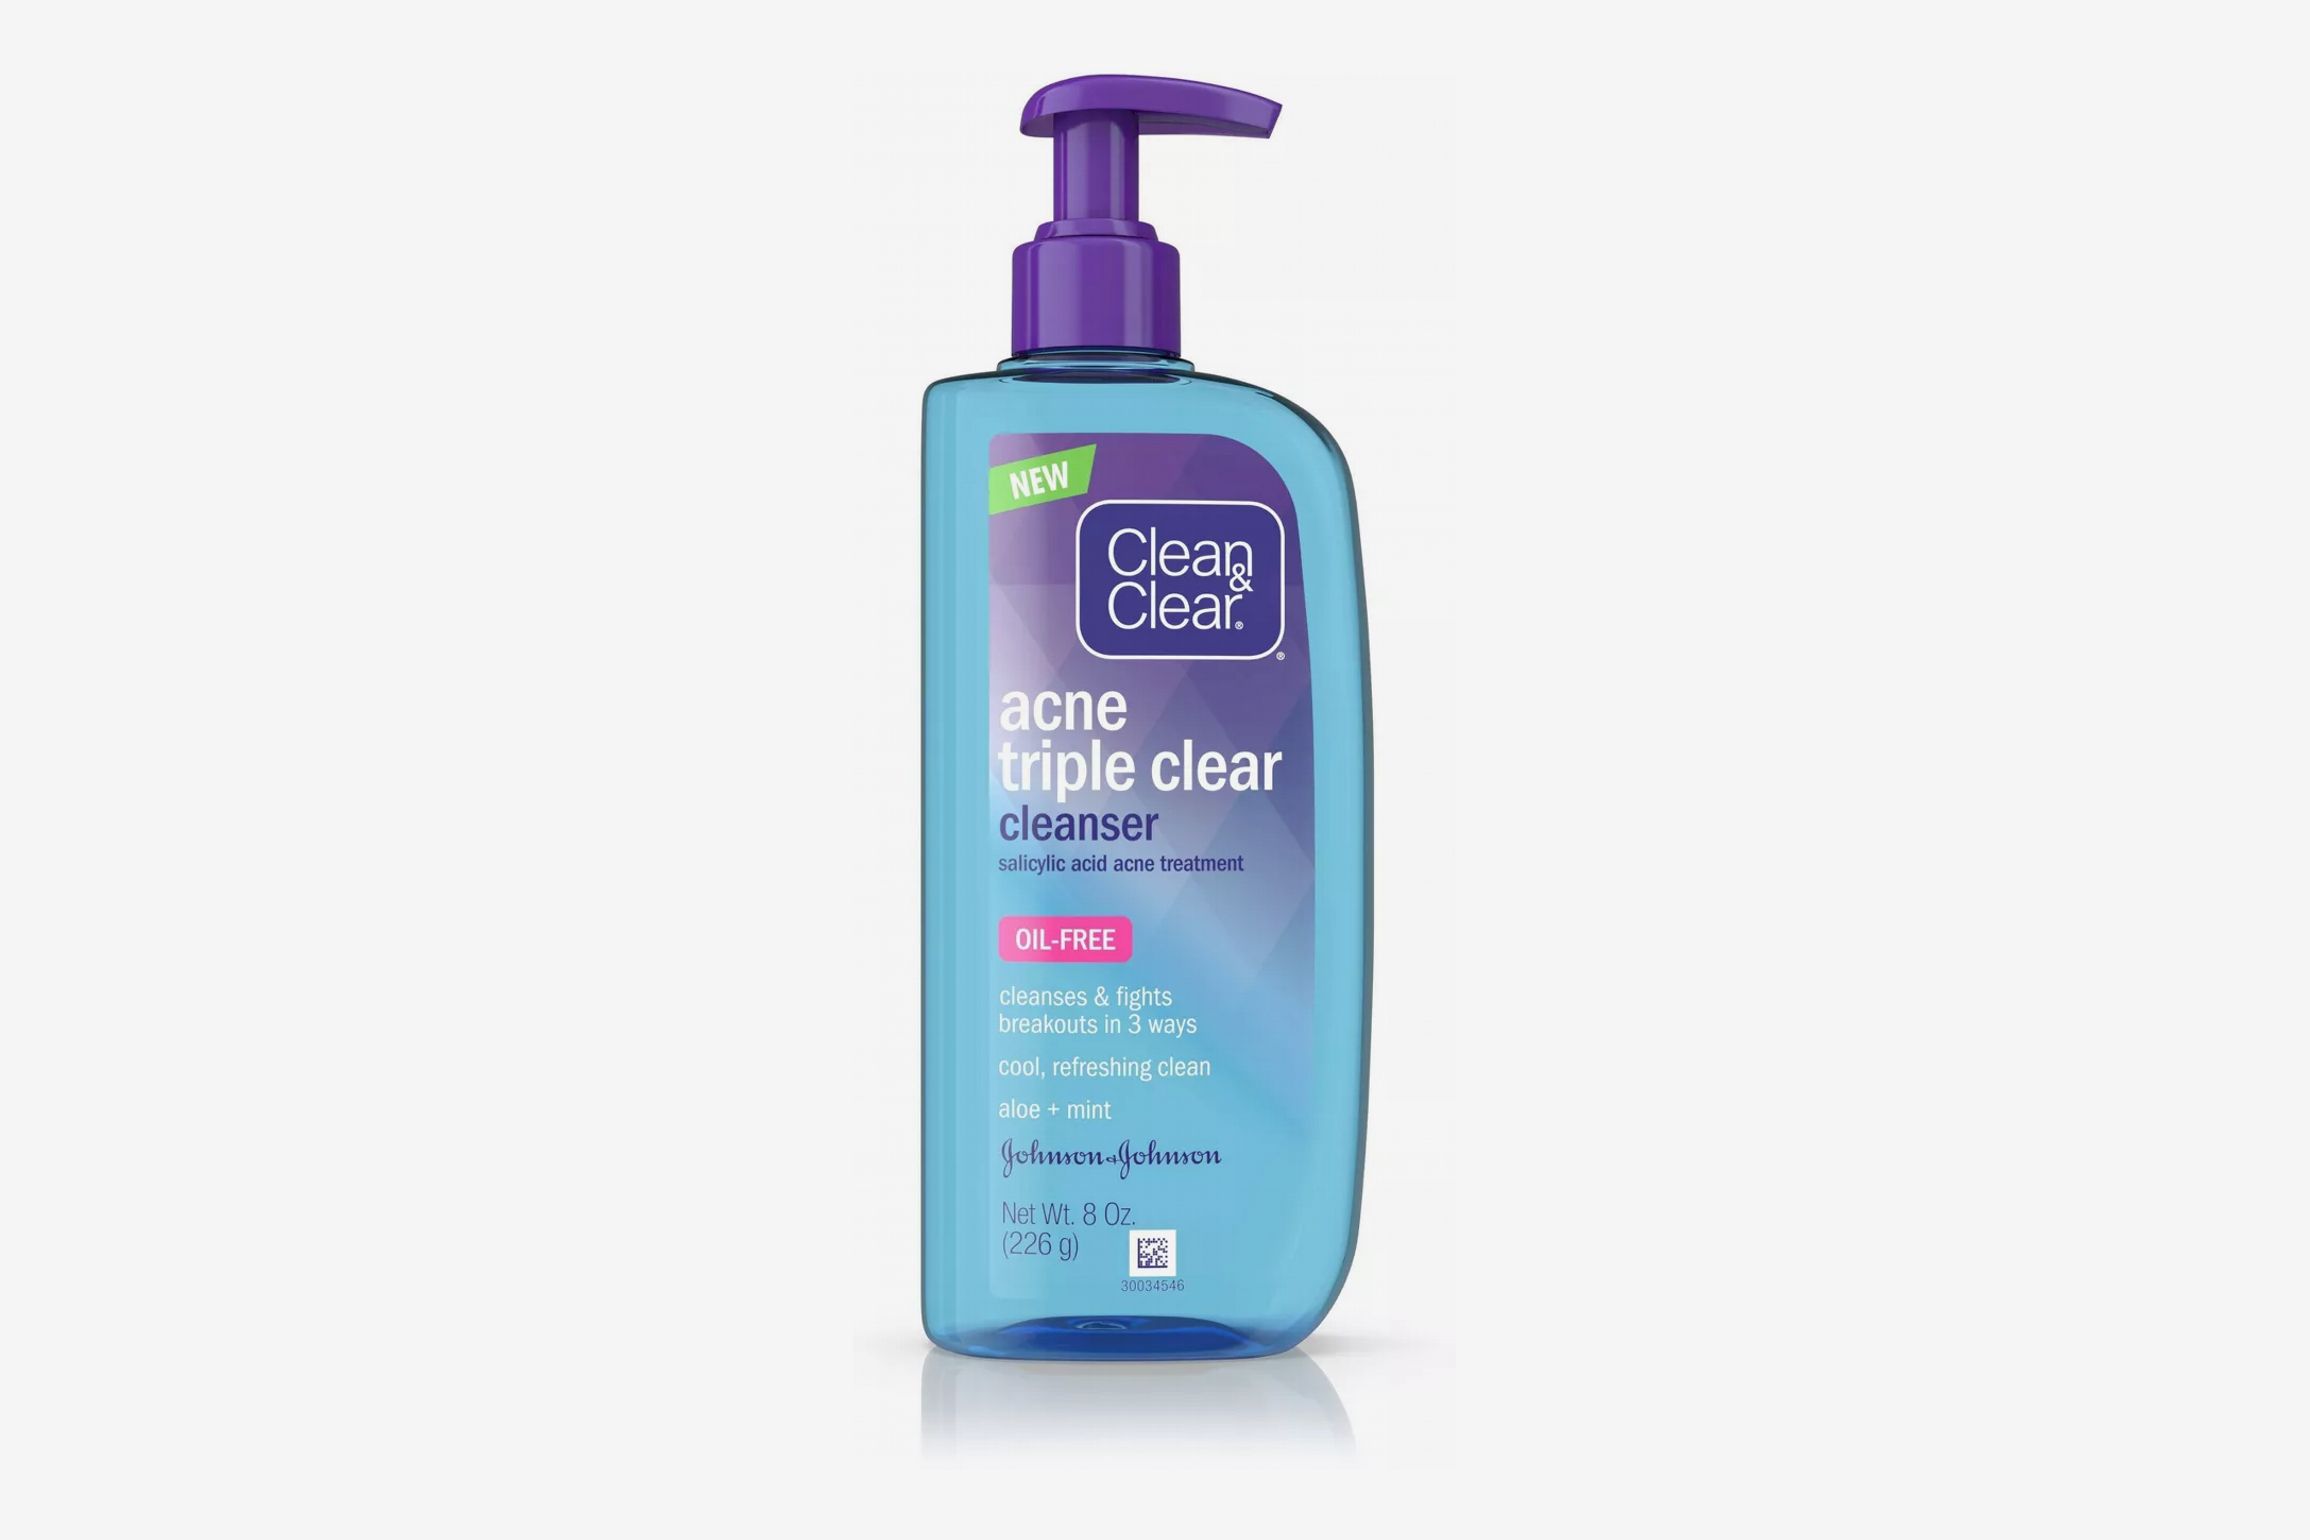 Cleanser for oily skin